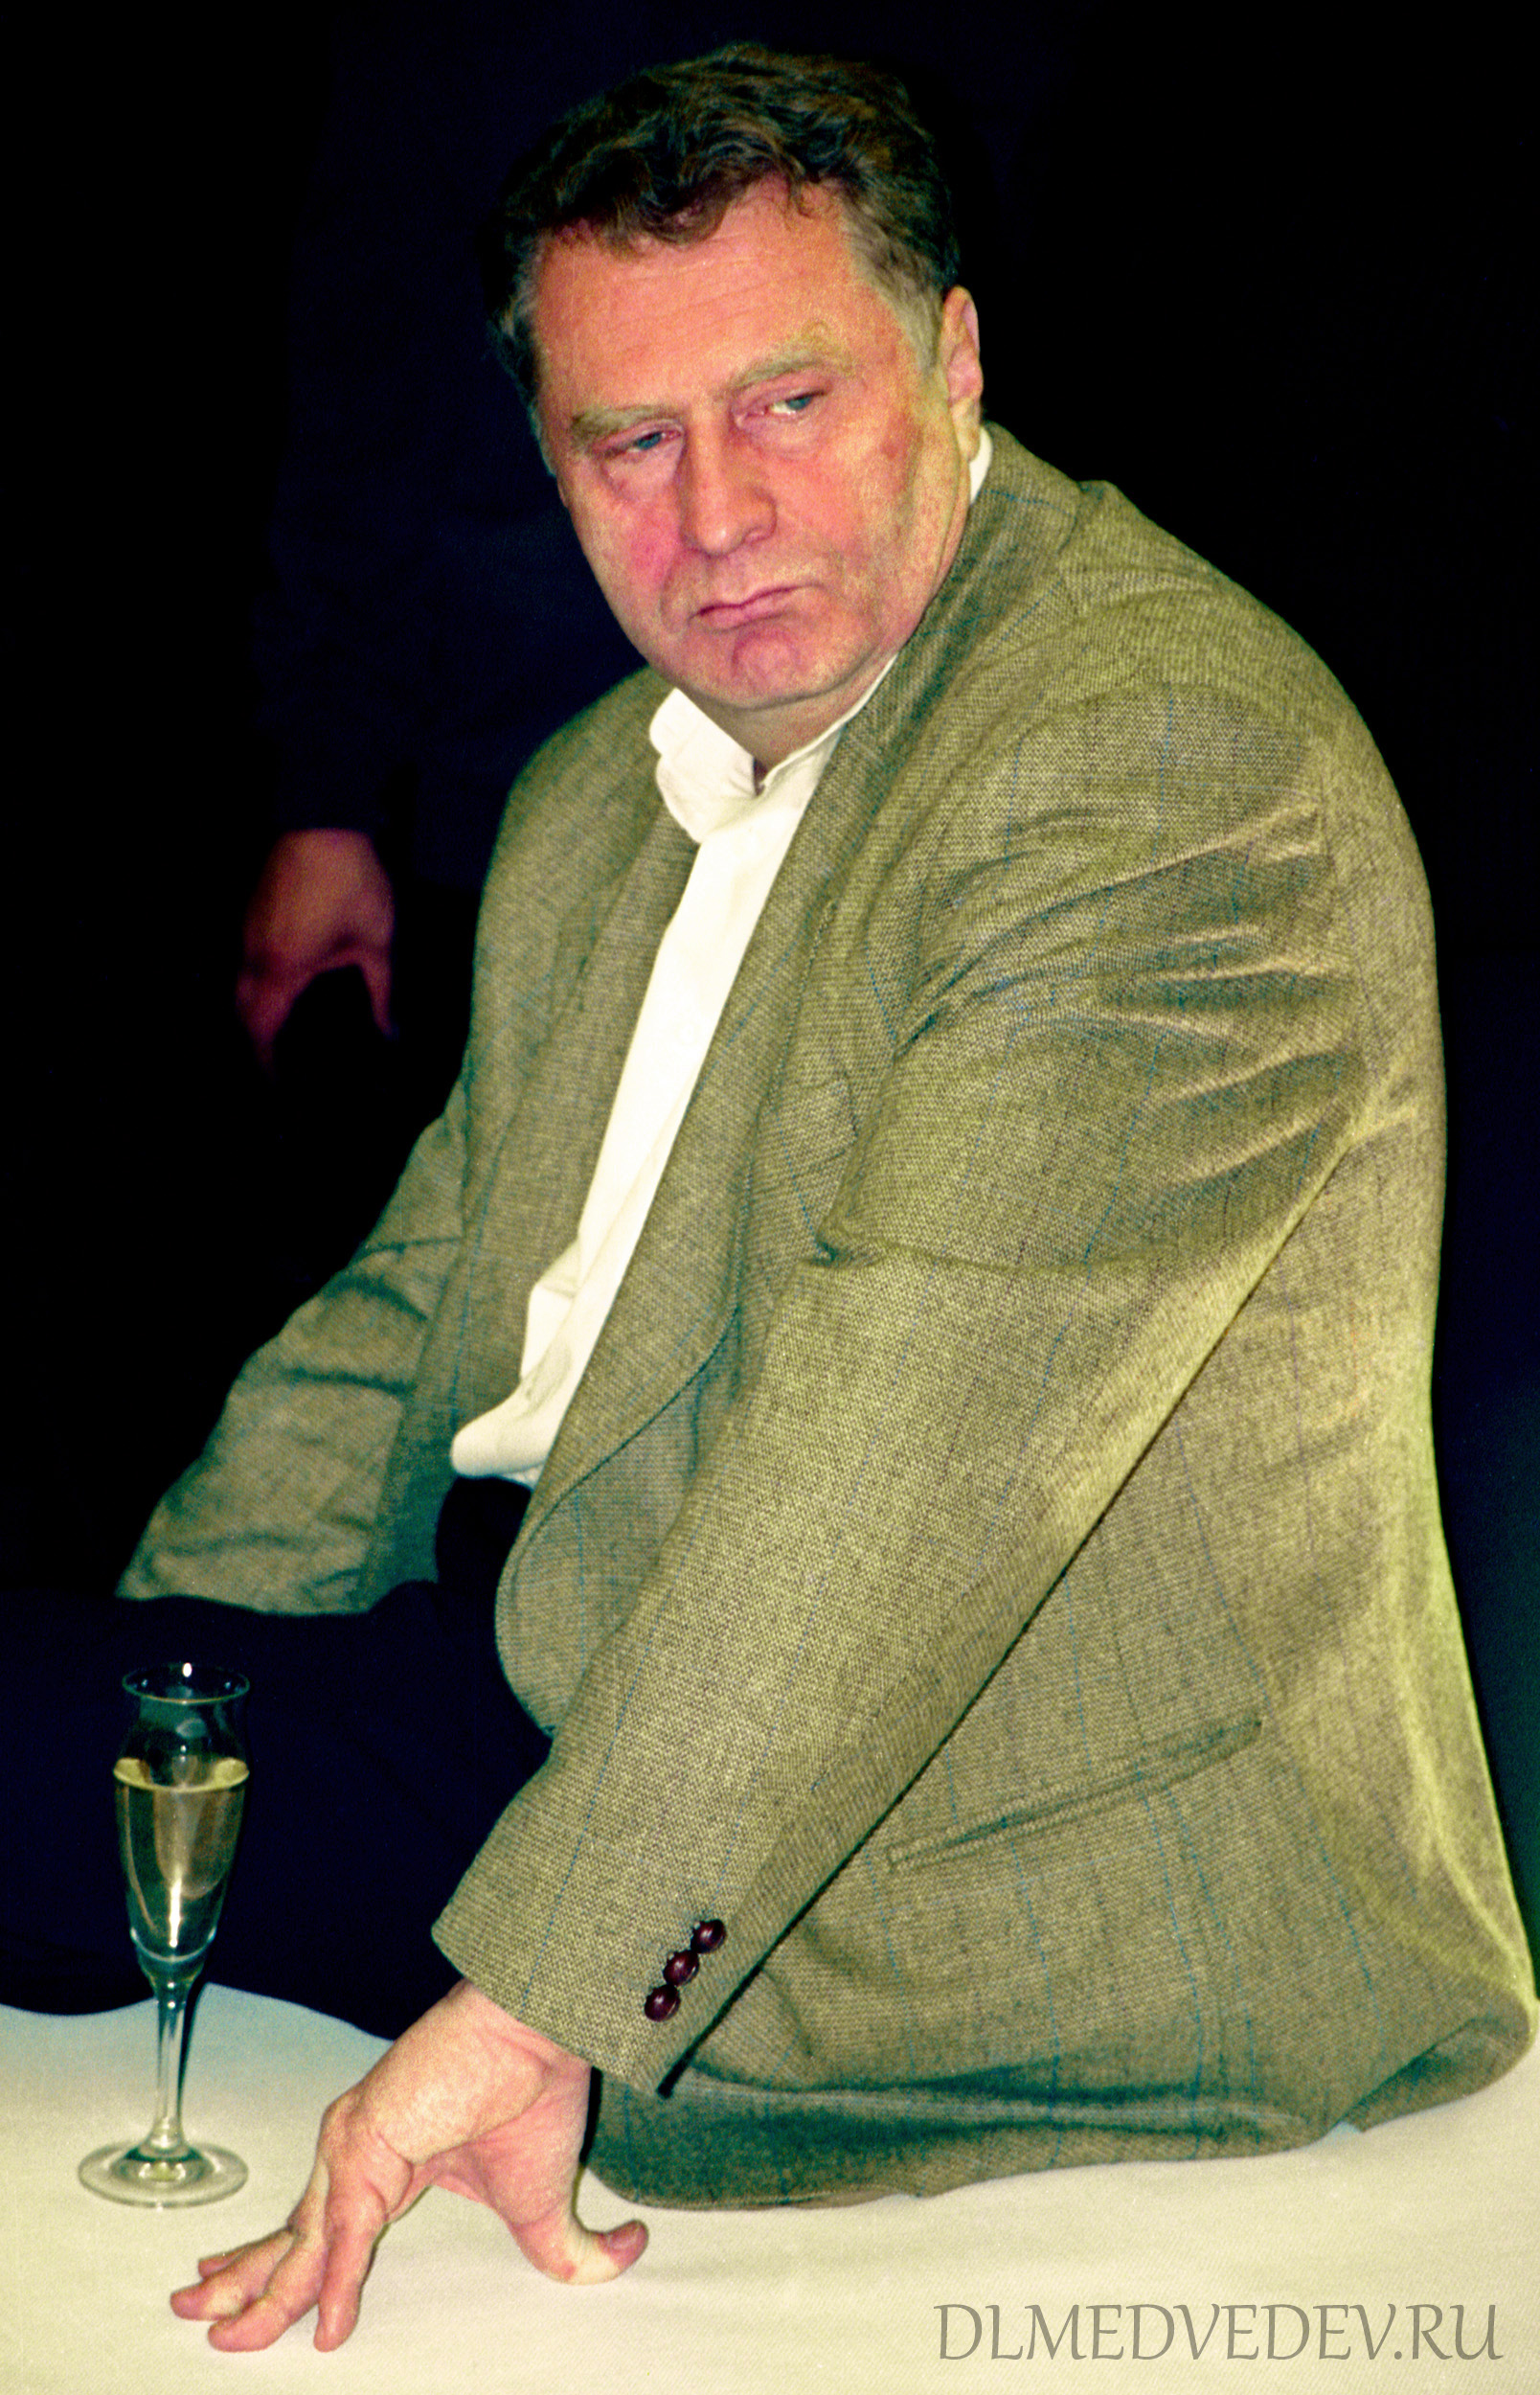 Портрет Владимира Жириновского, фото Льва Леонидовича Медведева